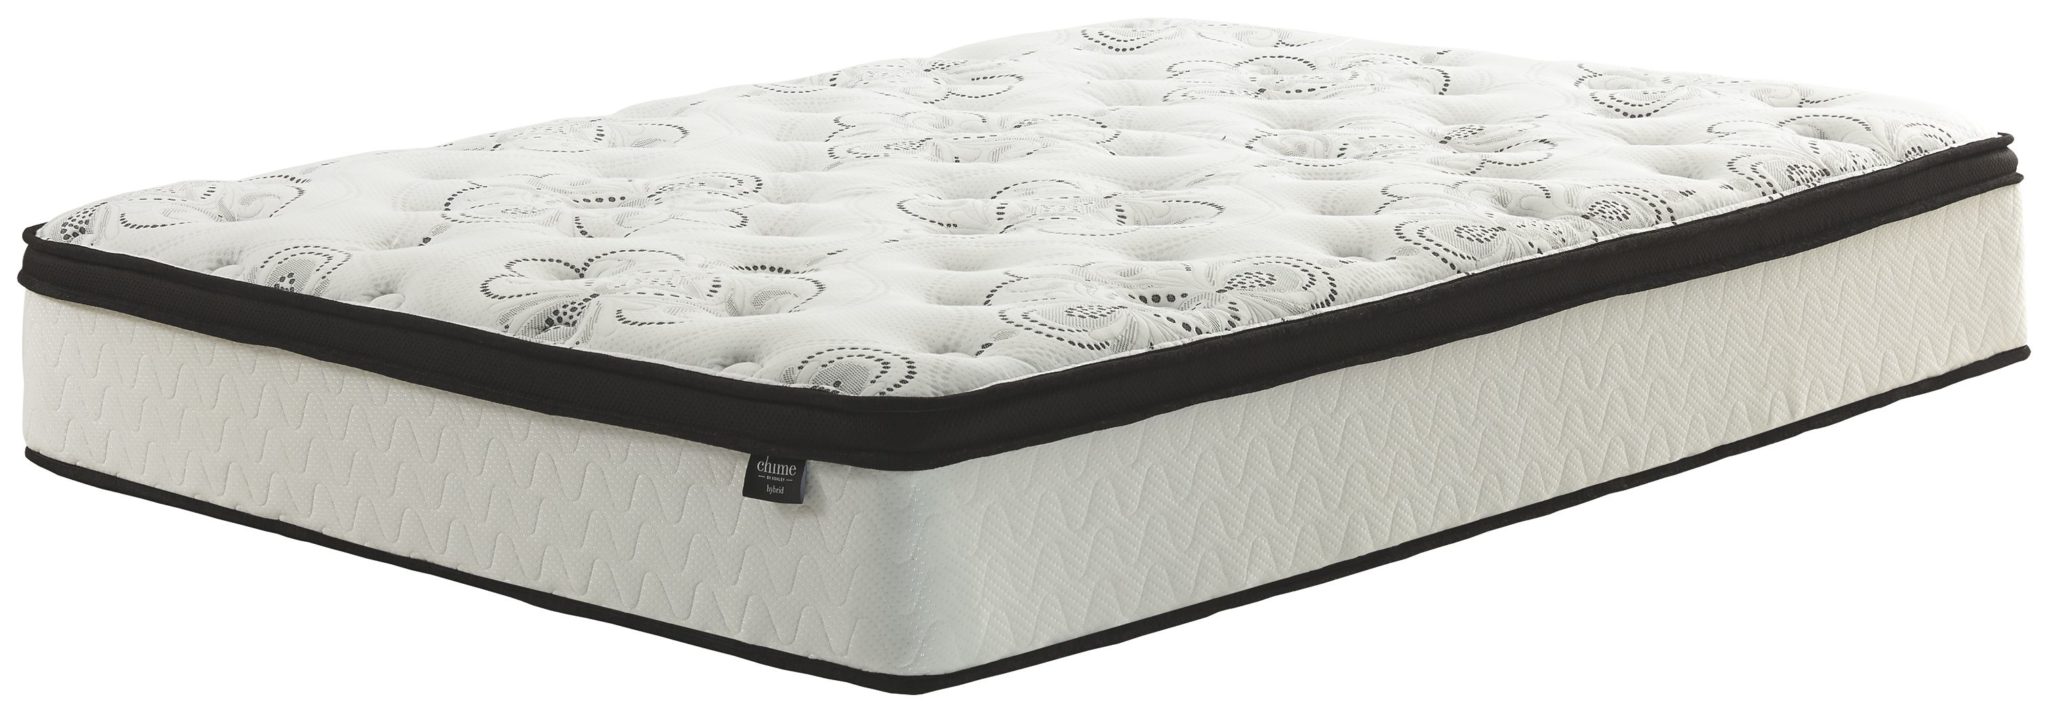 ashley furniture chime express mattress review